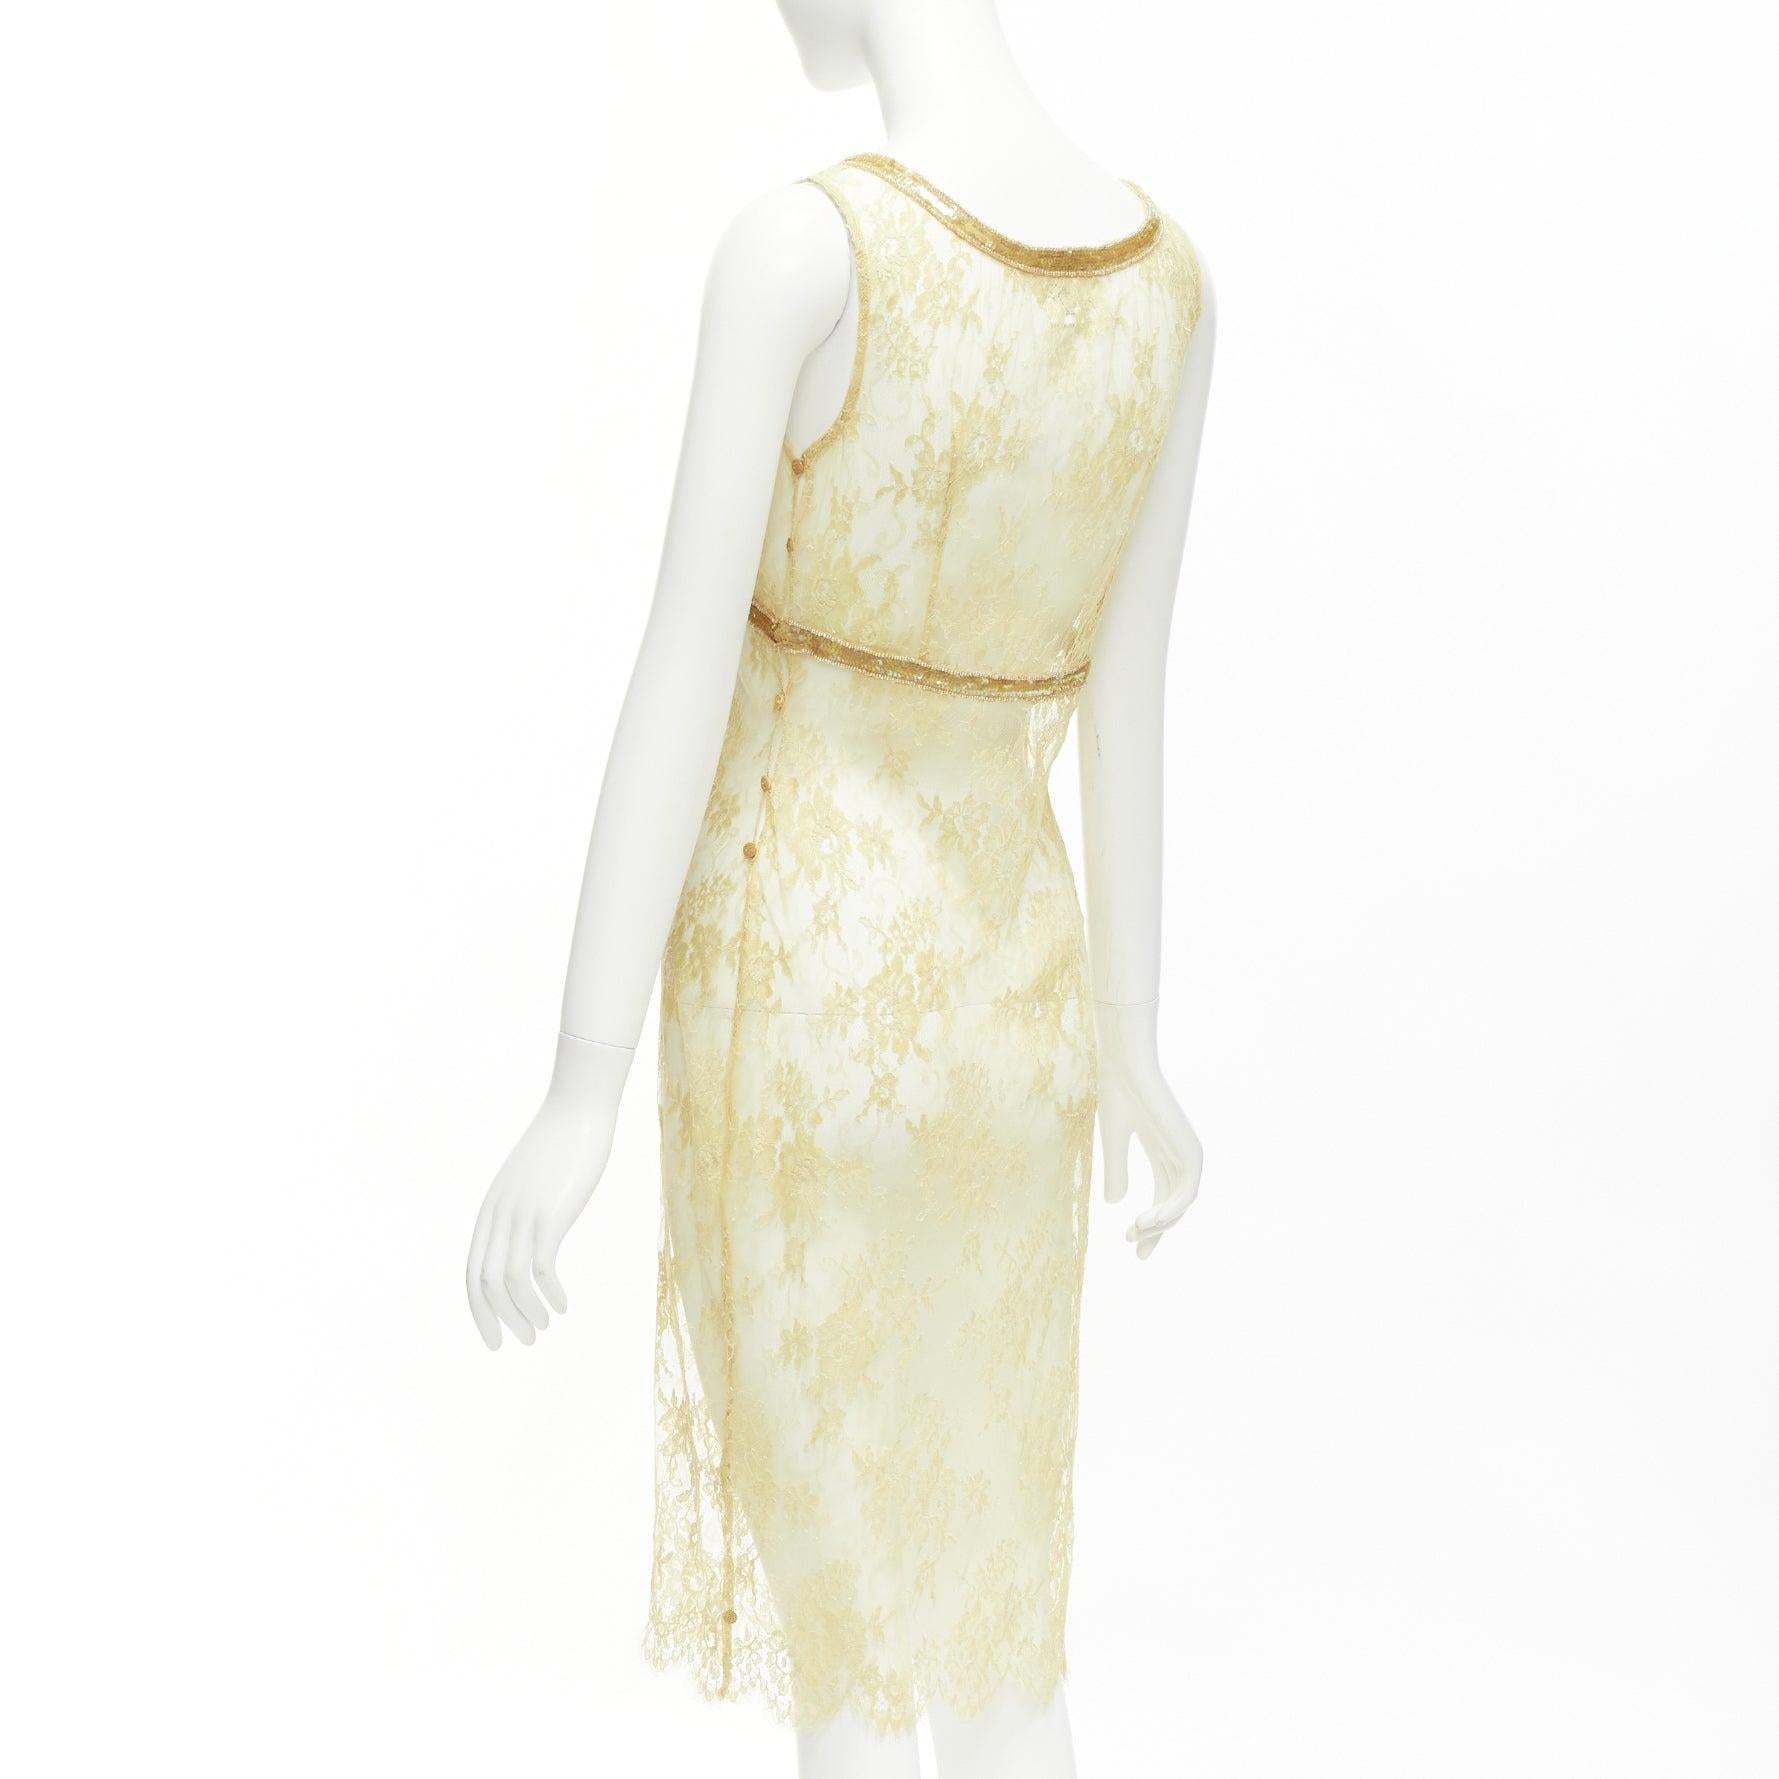 COLLETTE DINNIGAN Vintage gold sequins floral lace see through sheer dress S For Sale 2